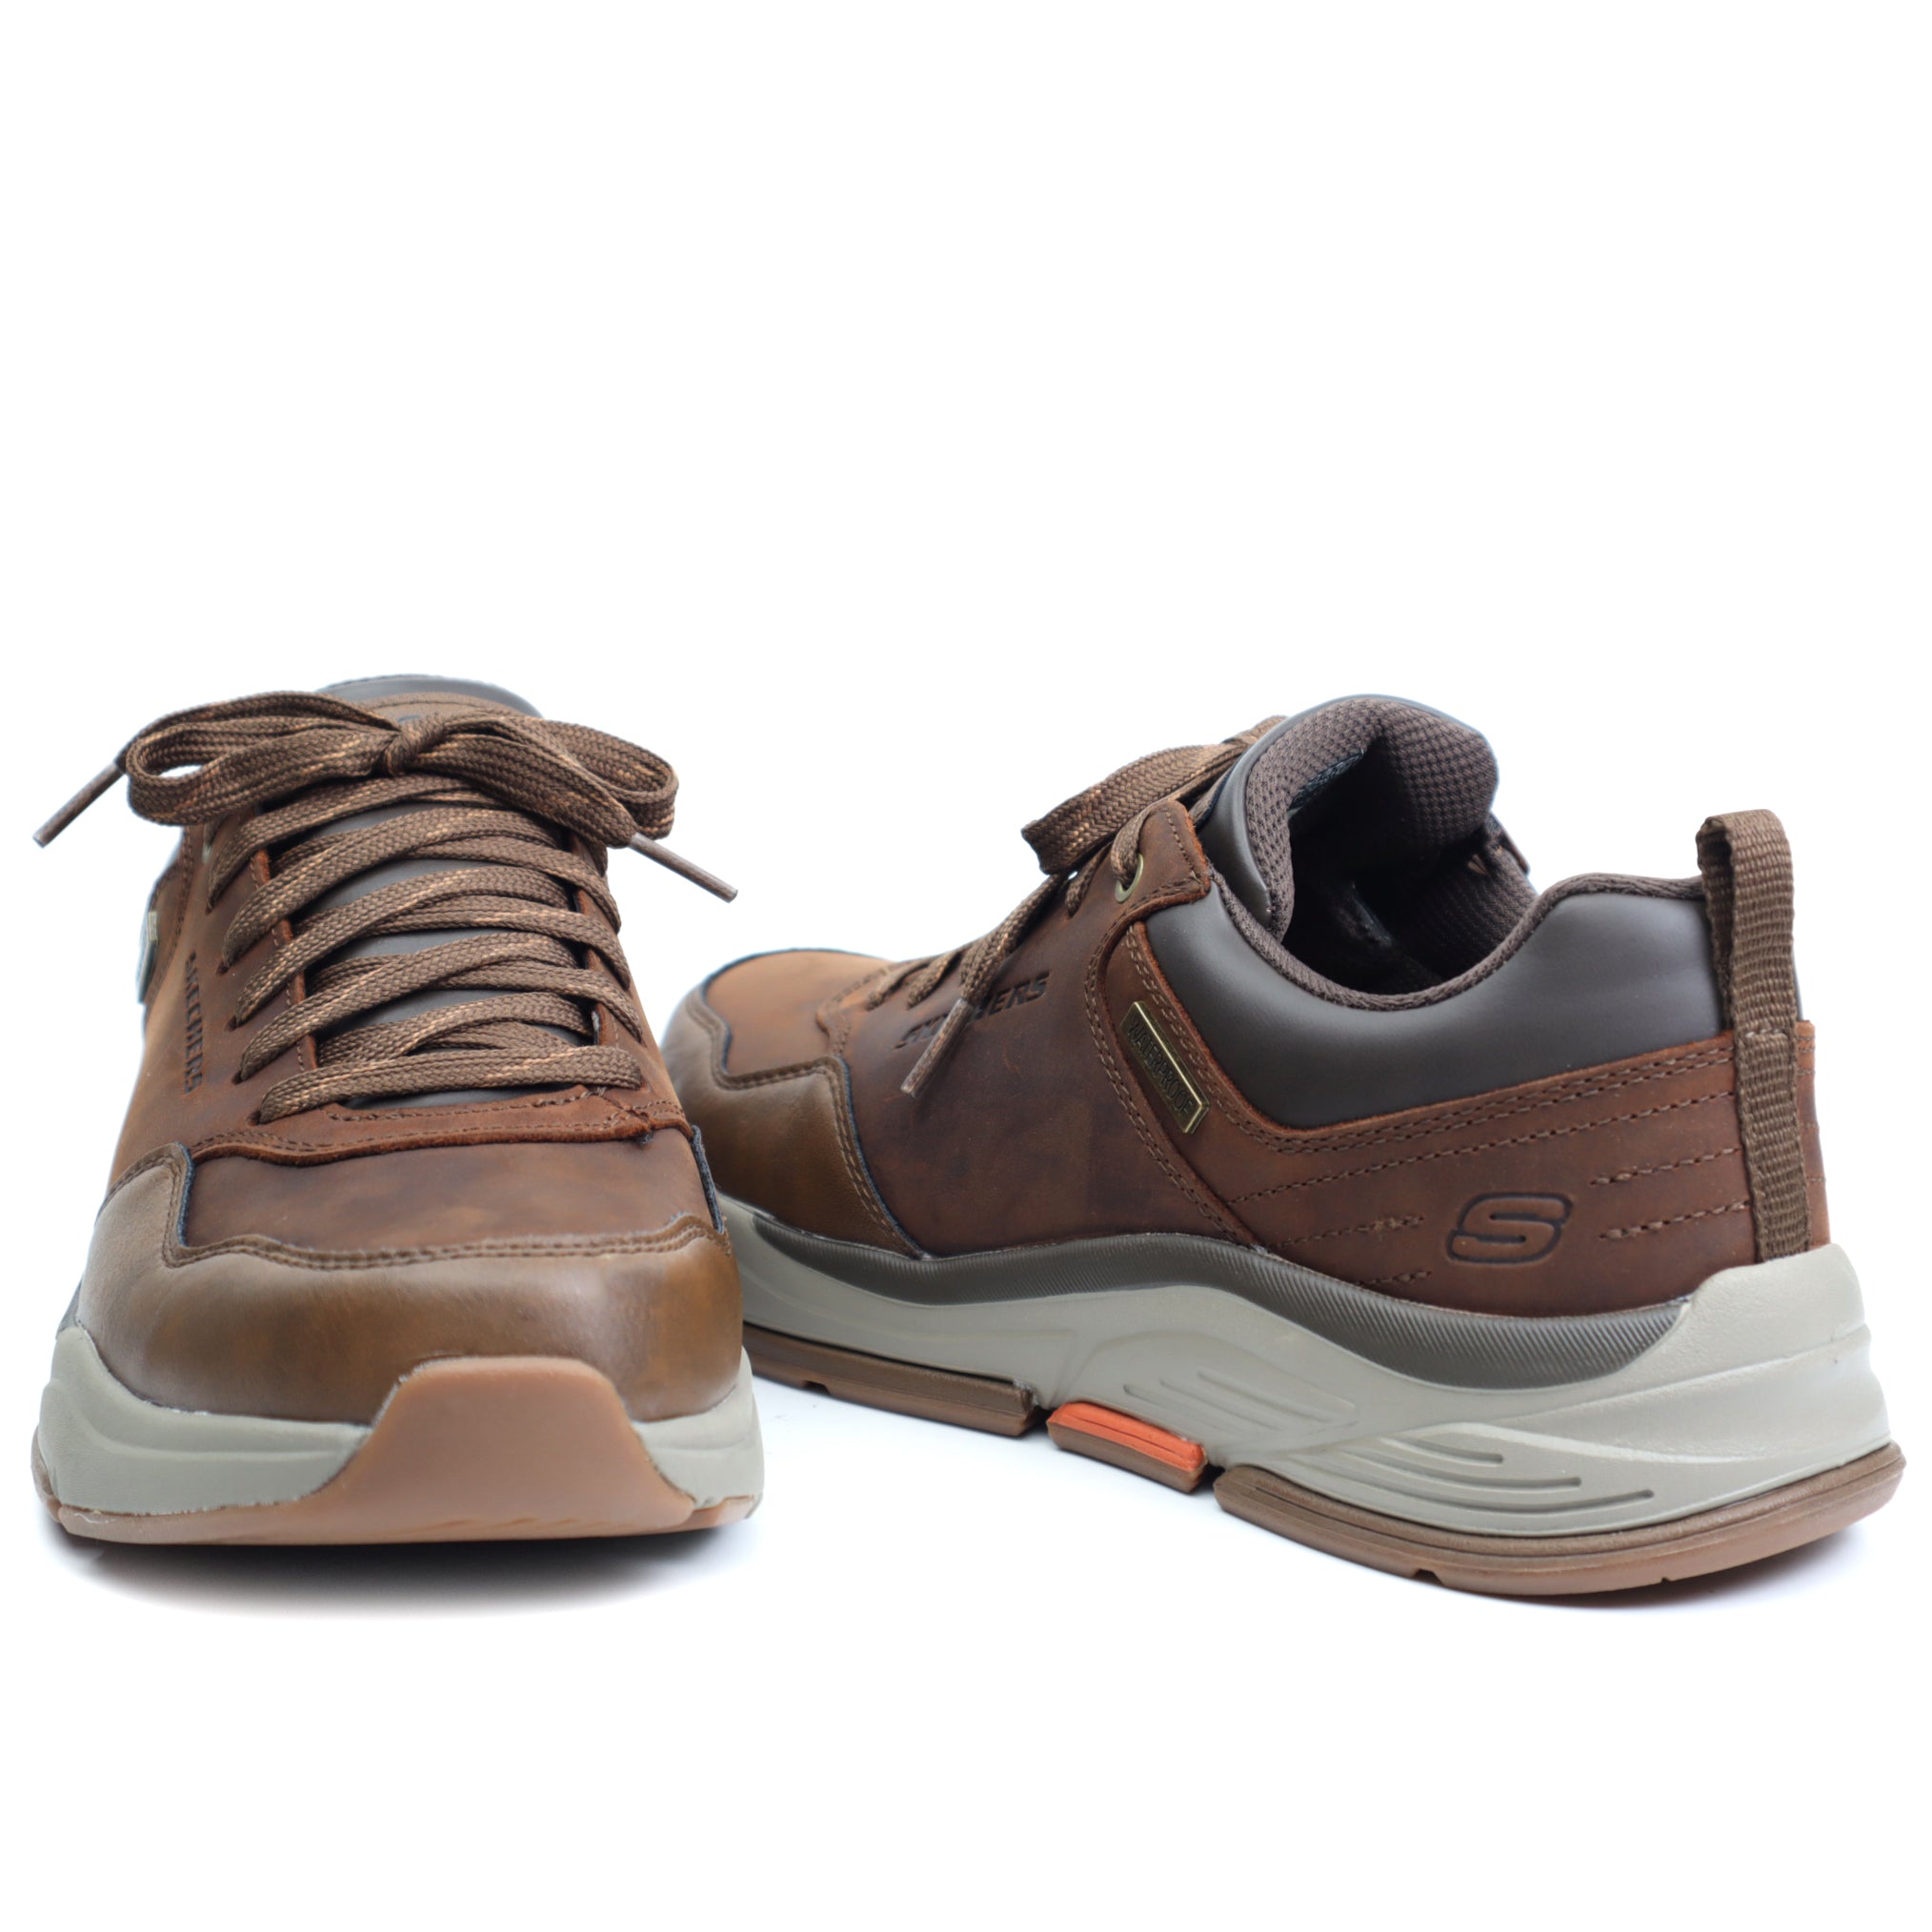 Skechers pantofi barbati watreproof 210021 Bengao Hombre maro IB2300-MARO